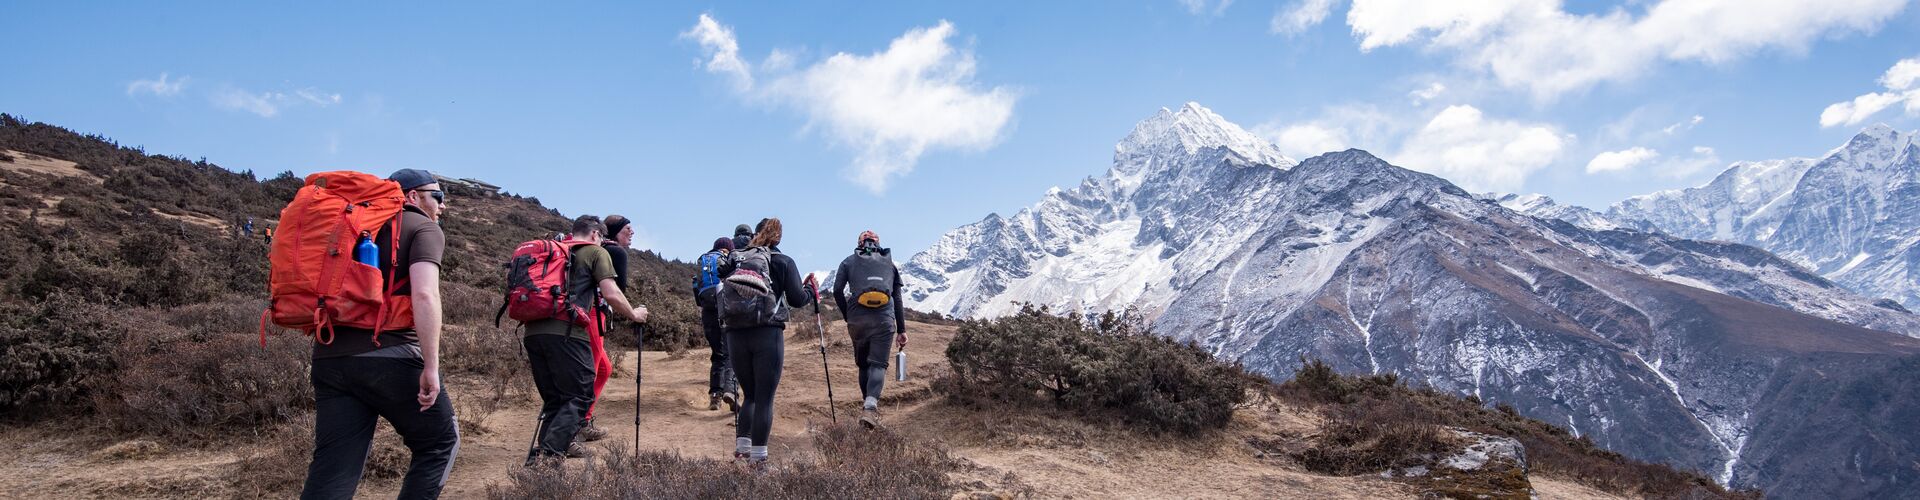 Trekkers walking to Everest Base Camp